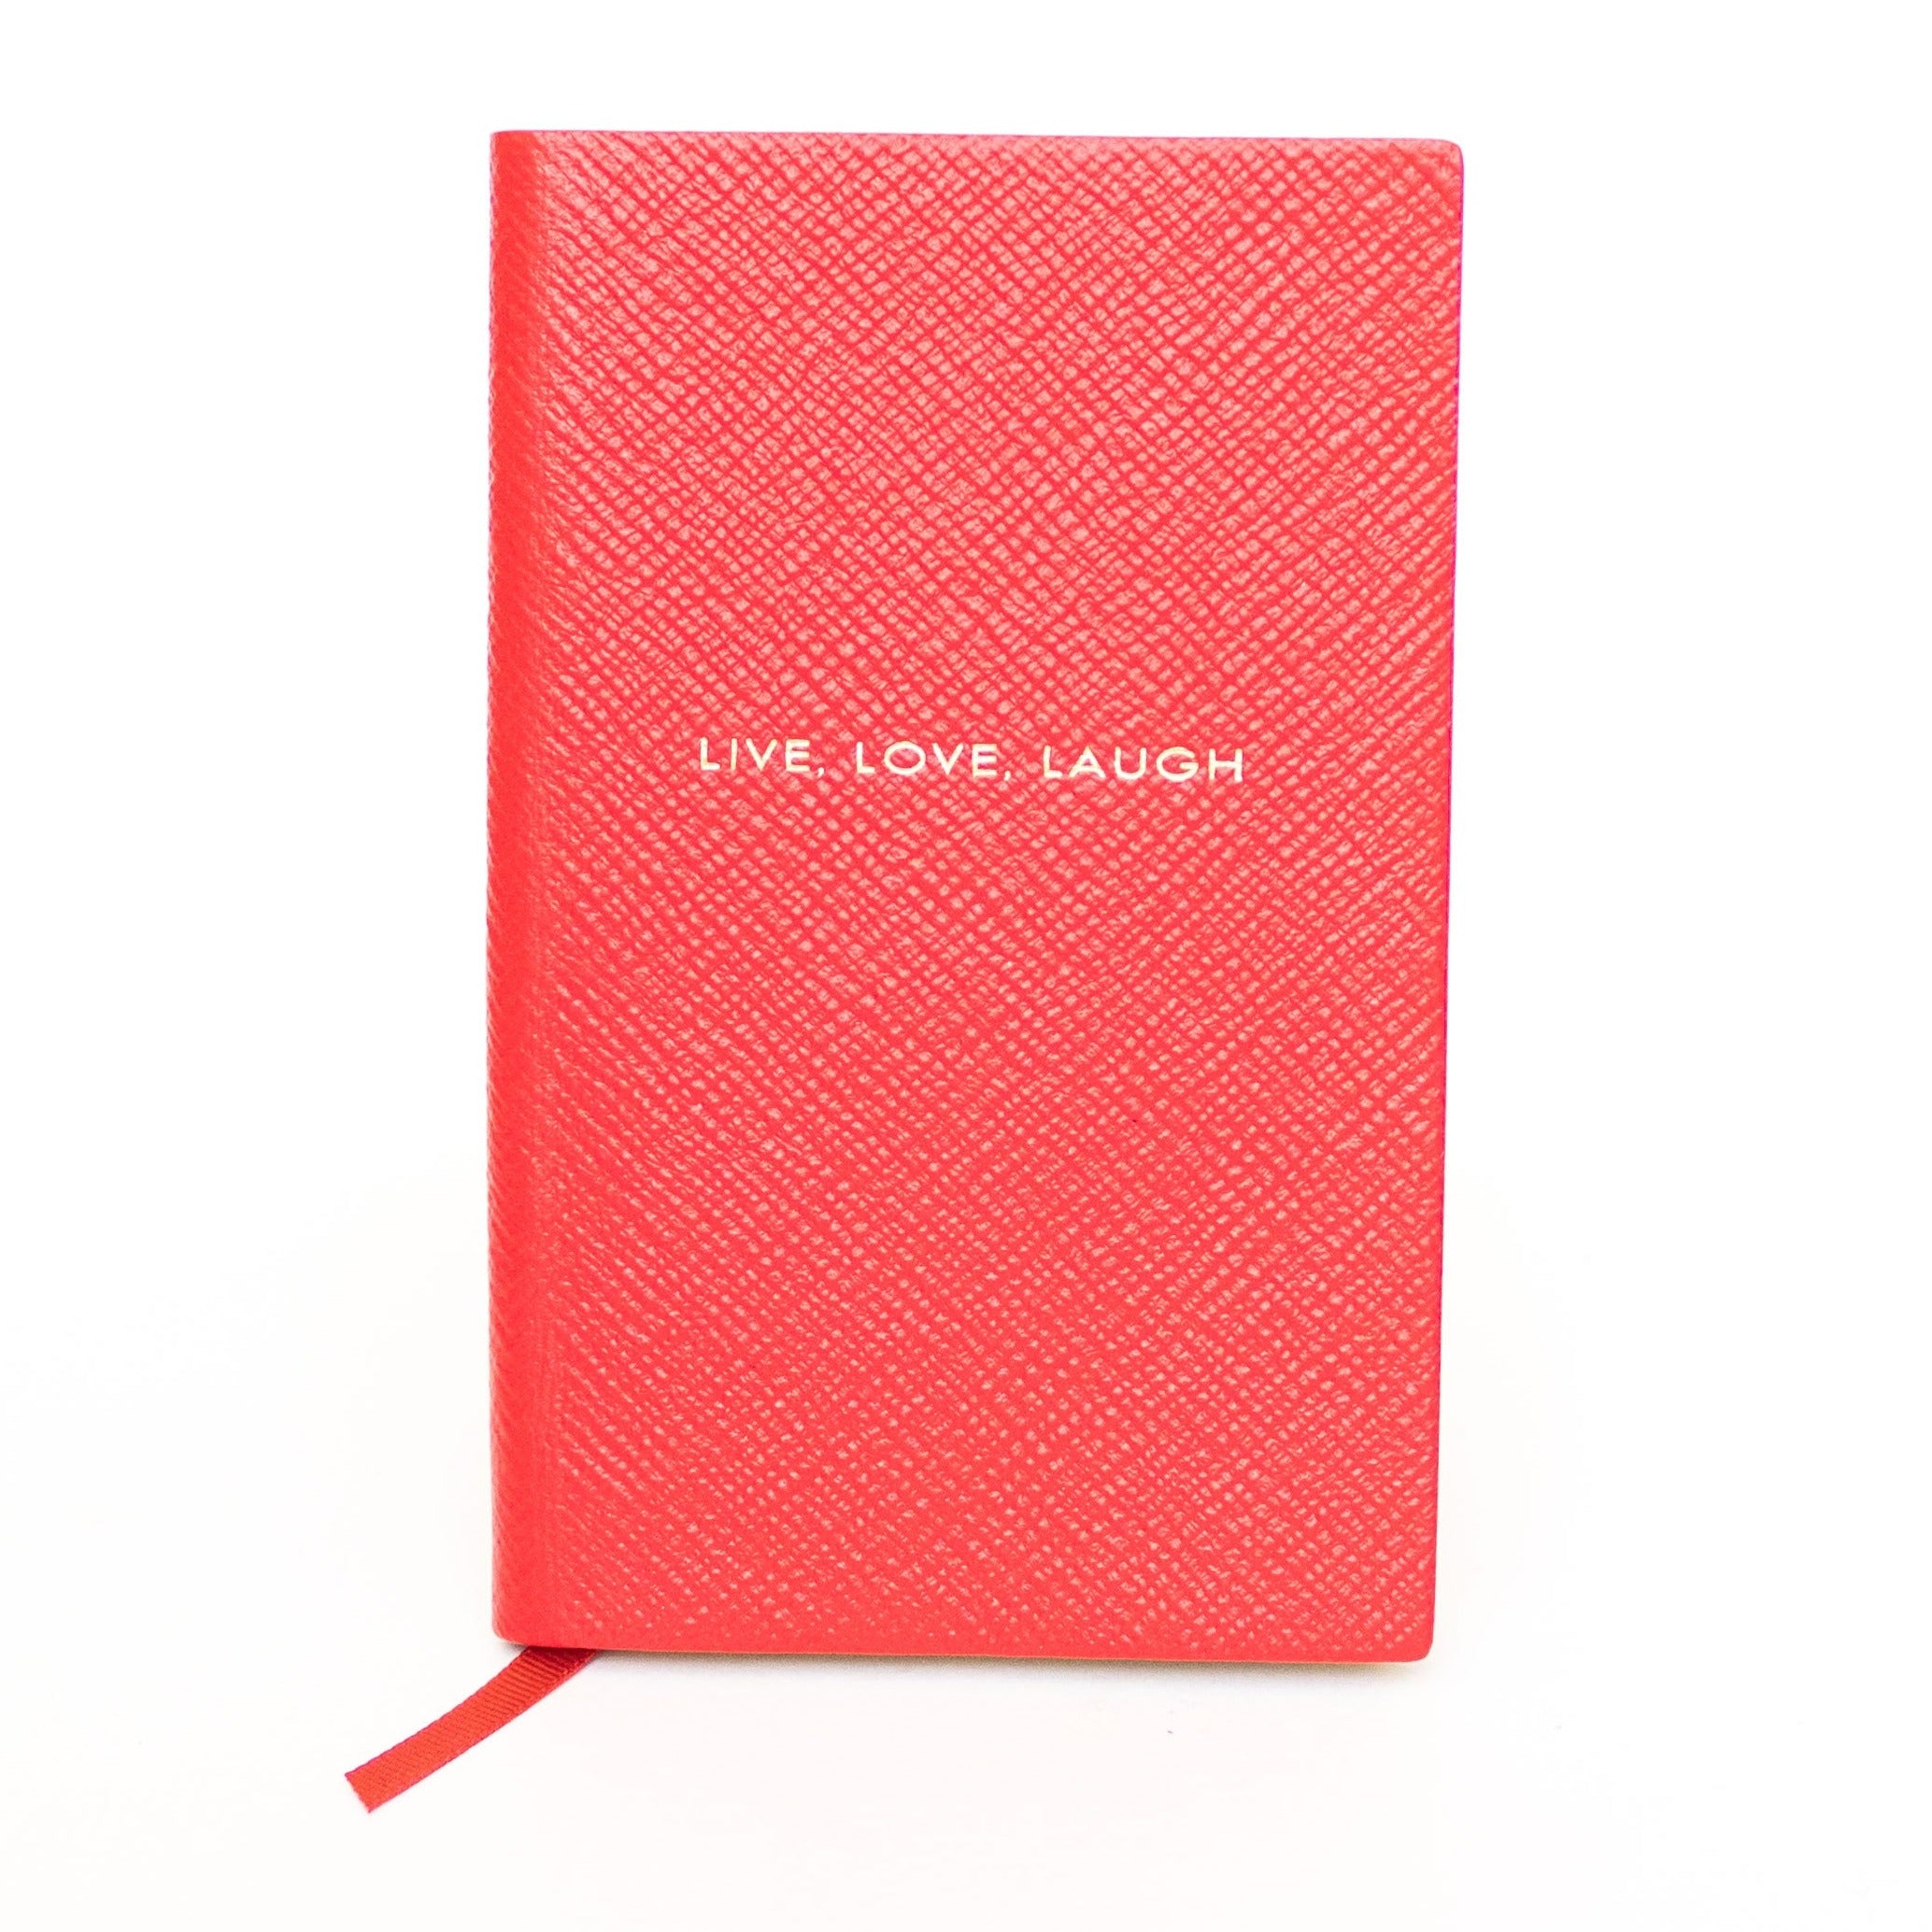 Smythson Live Love Laugh Notebook Red - Decree Co. 